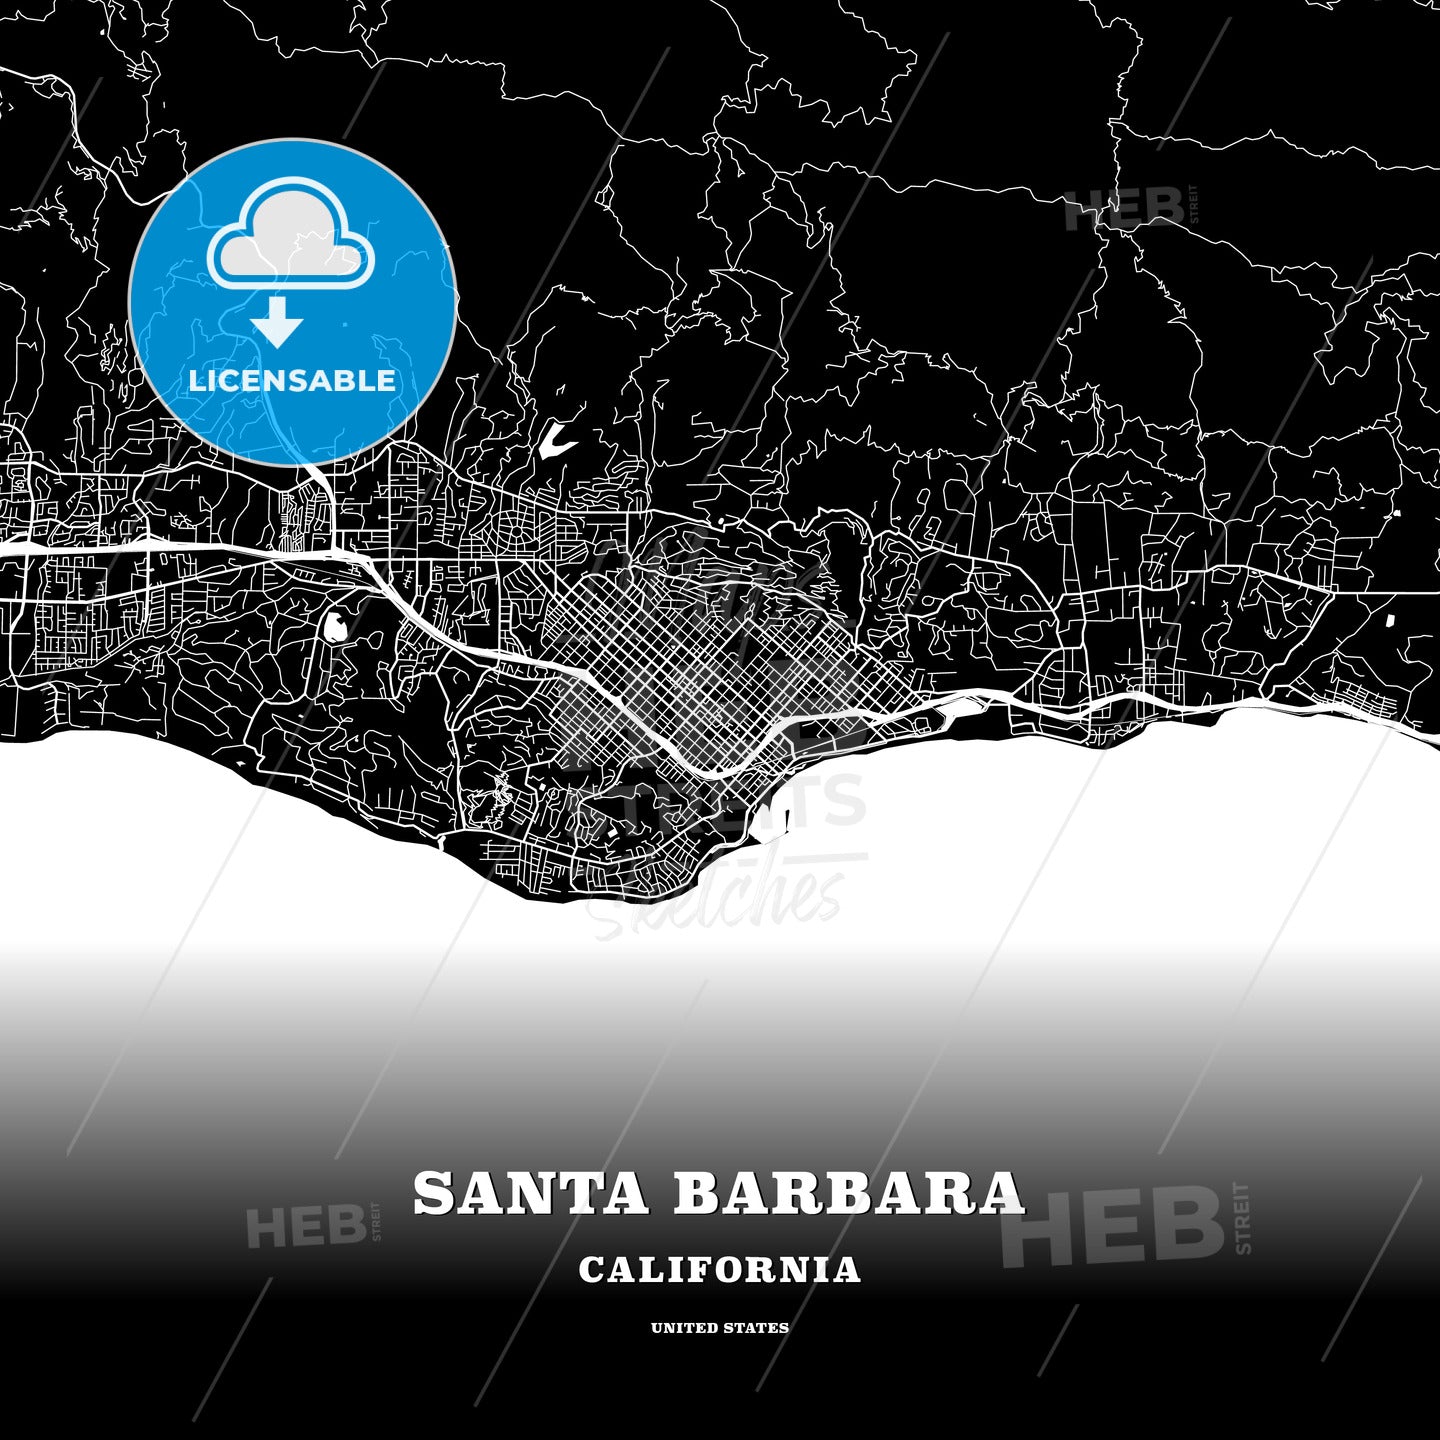 Santa Barbara, California, USA map